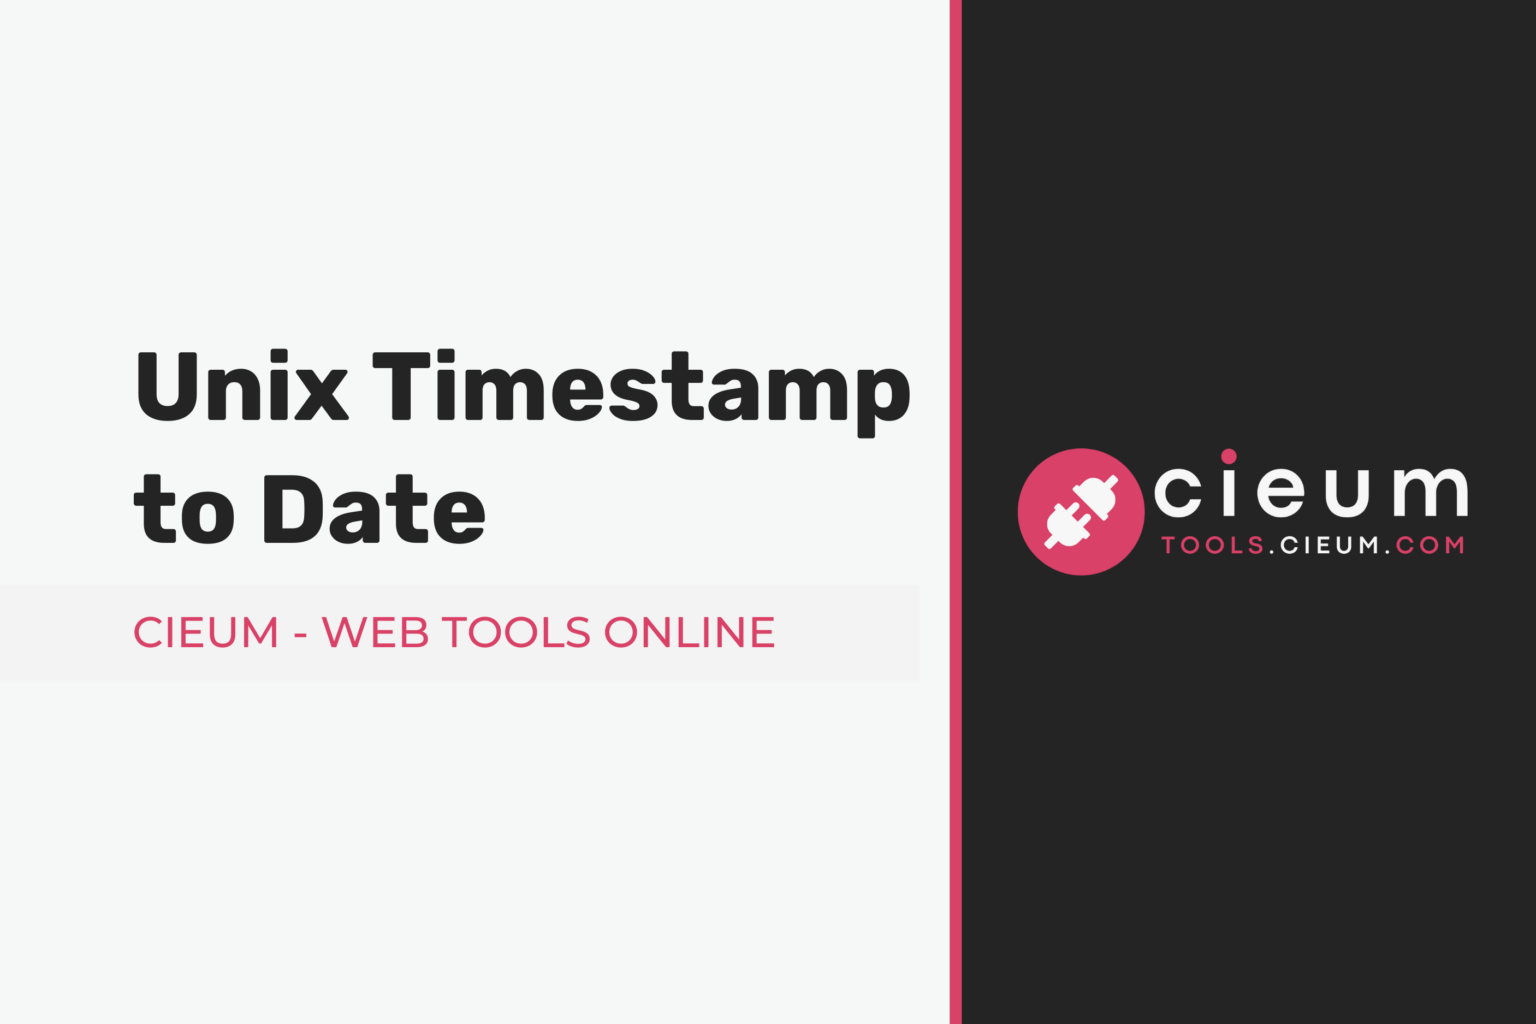 Convert Unix Timestamp to Date